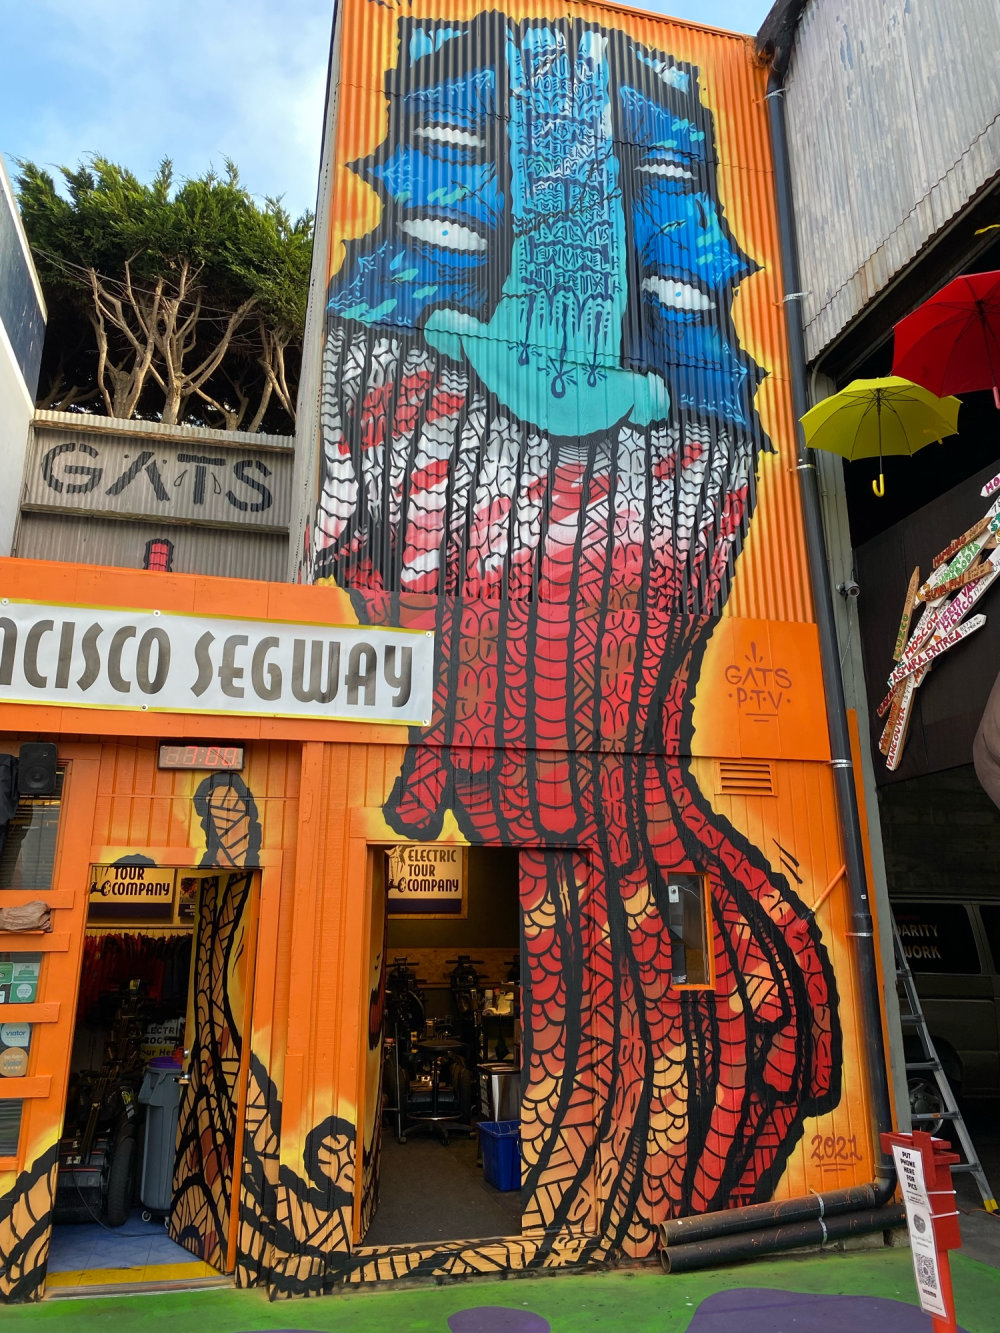 mural in San Francisco by artist GATS PTV.